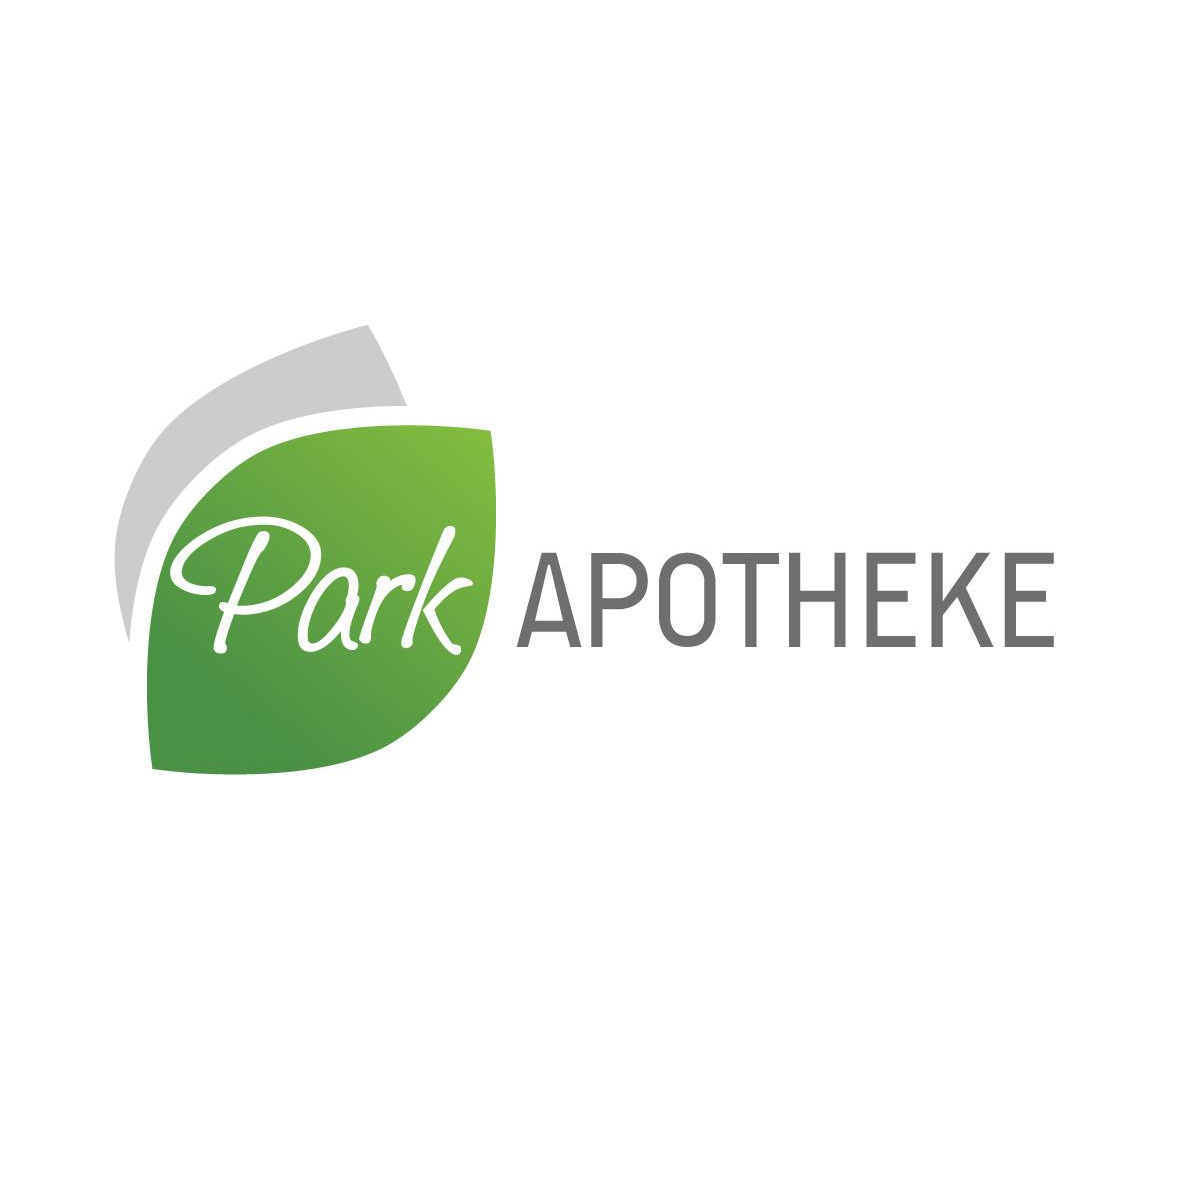 Park Apotheke in München - Logo